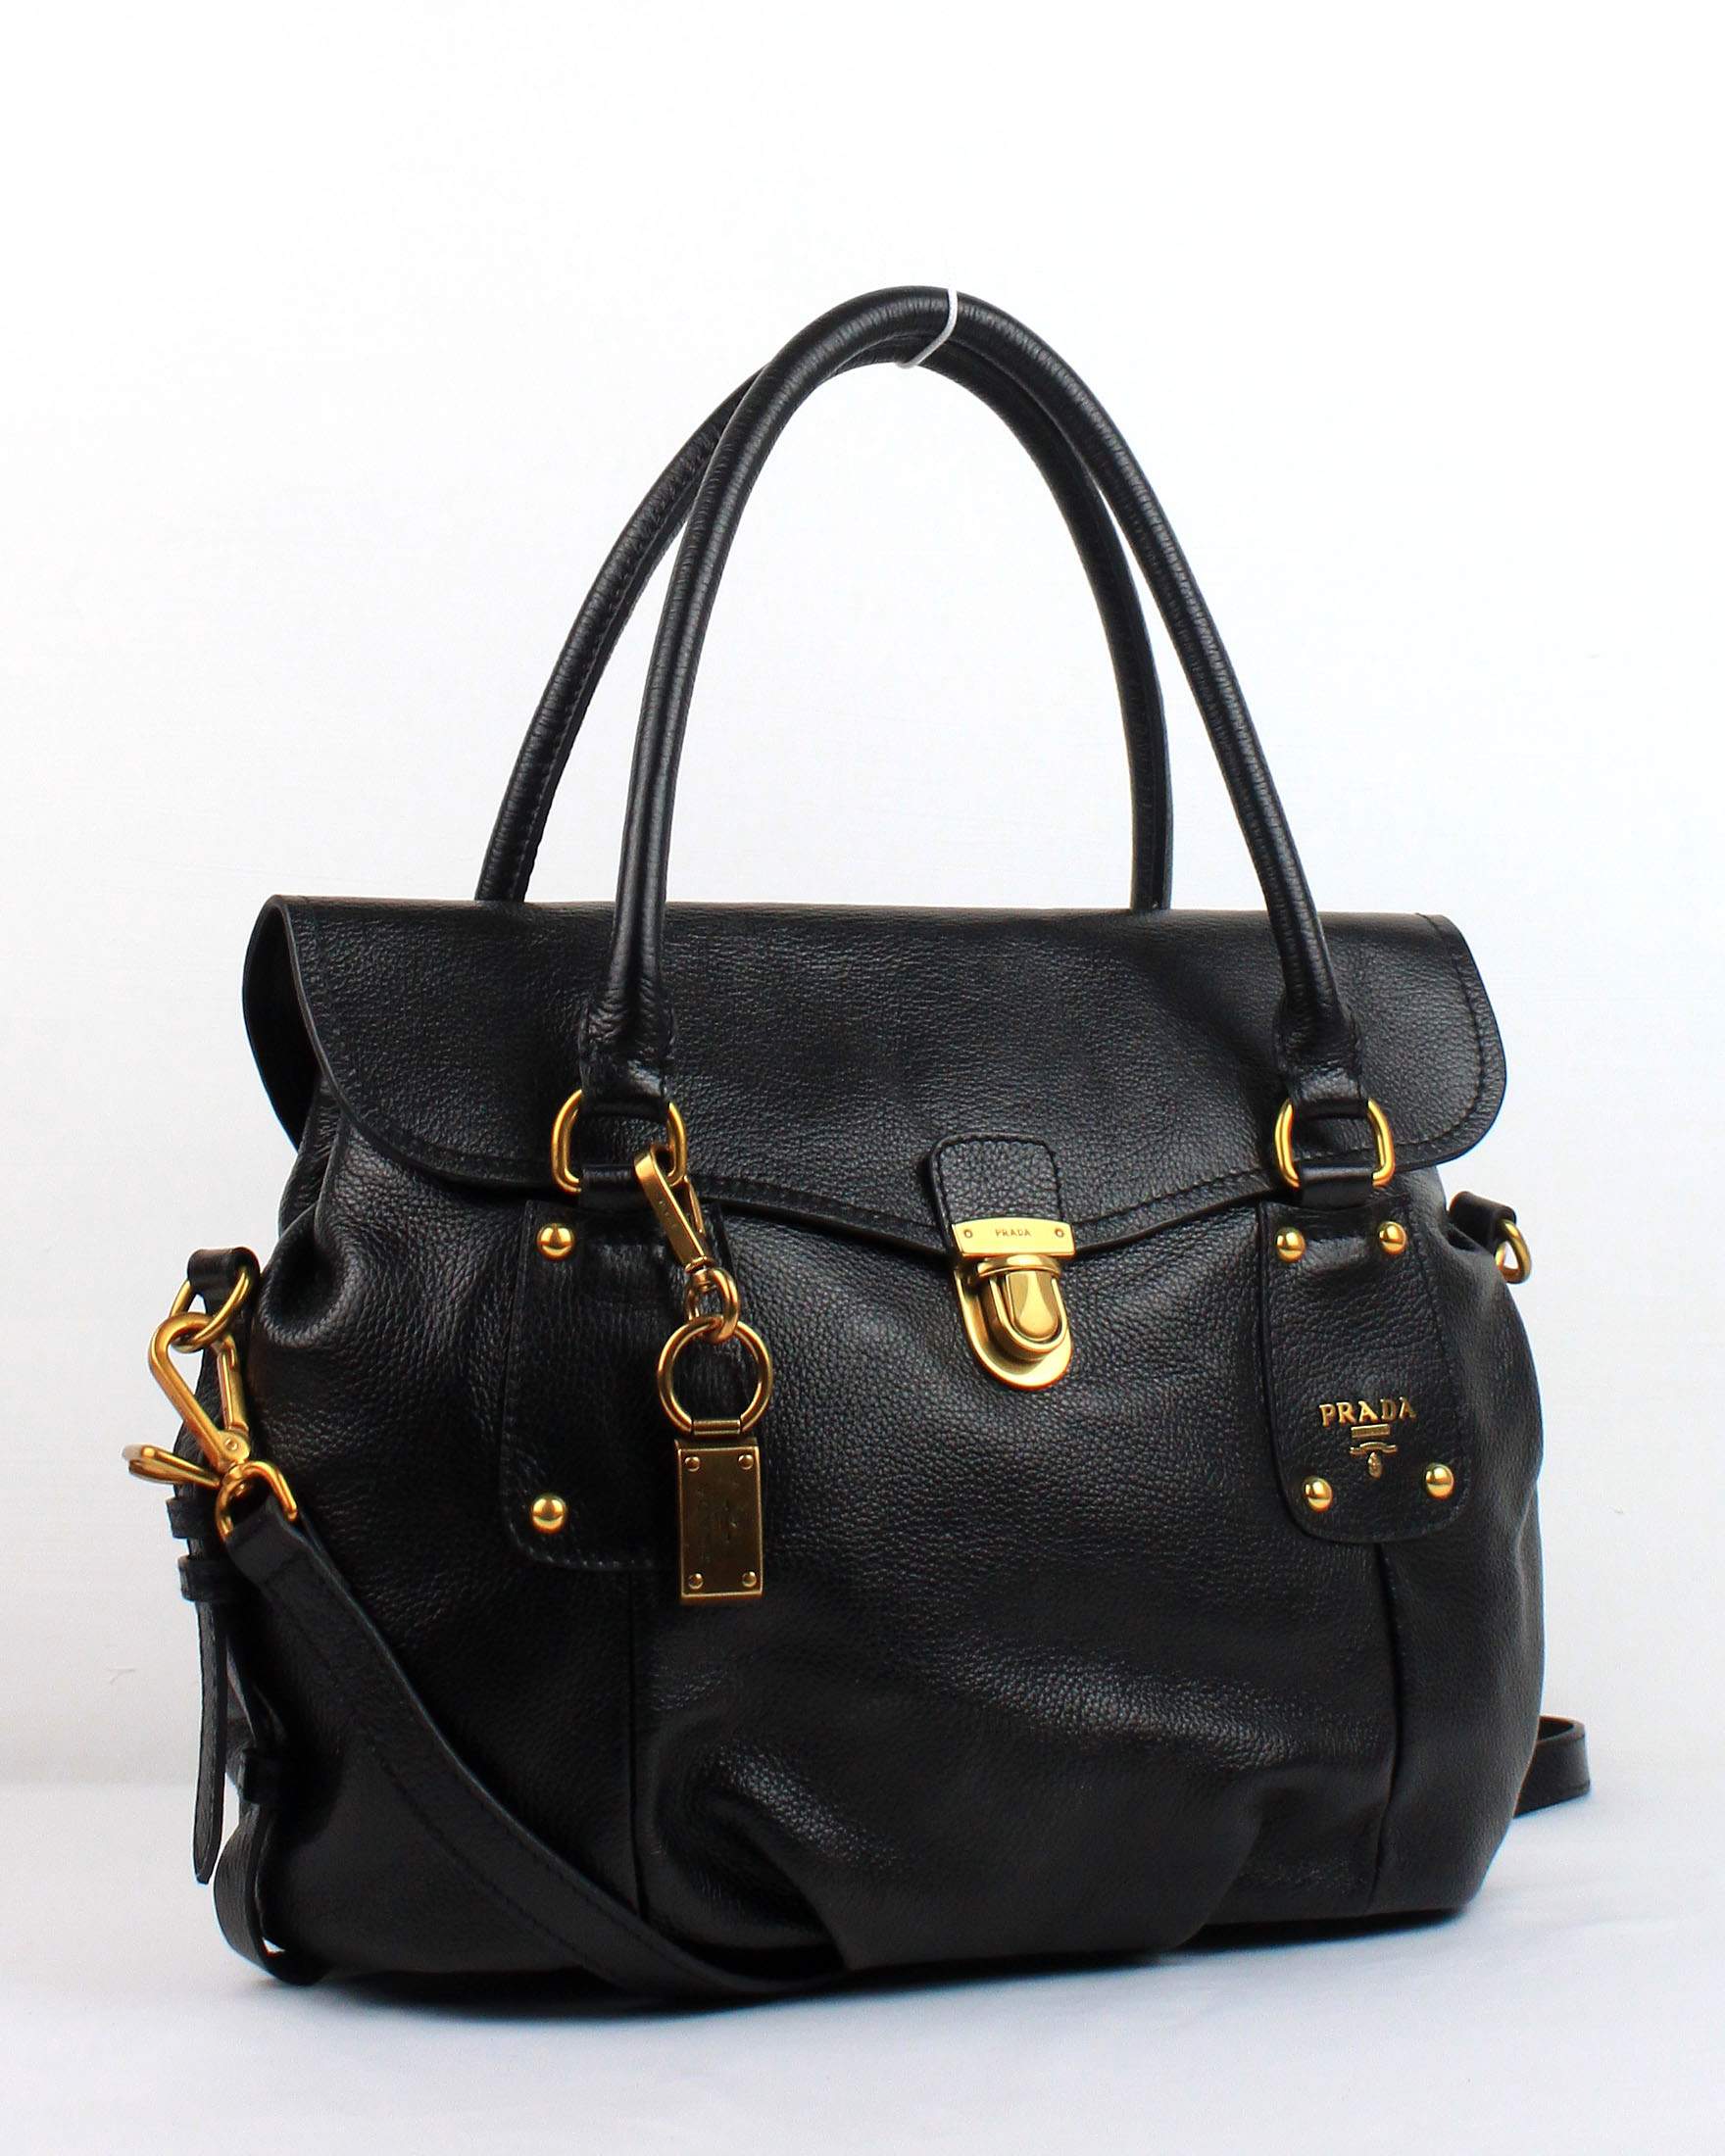 Prada Milled Leather Tote Bag - 8030 Black